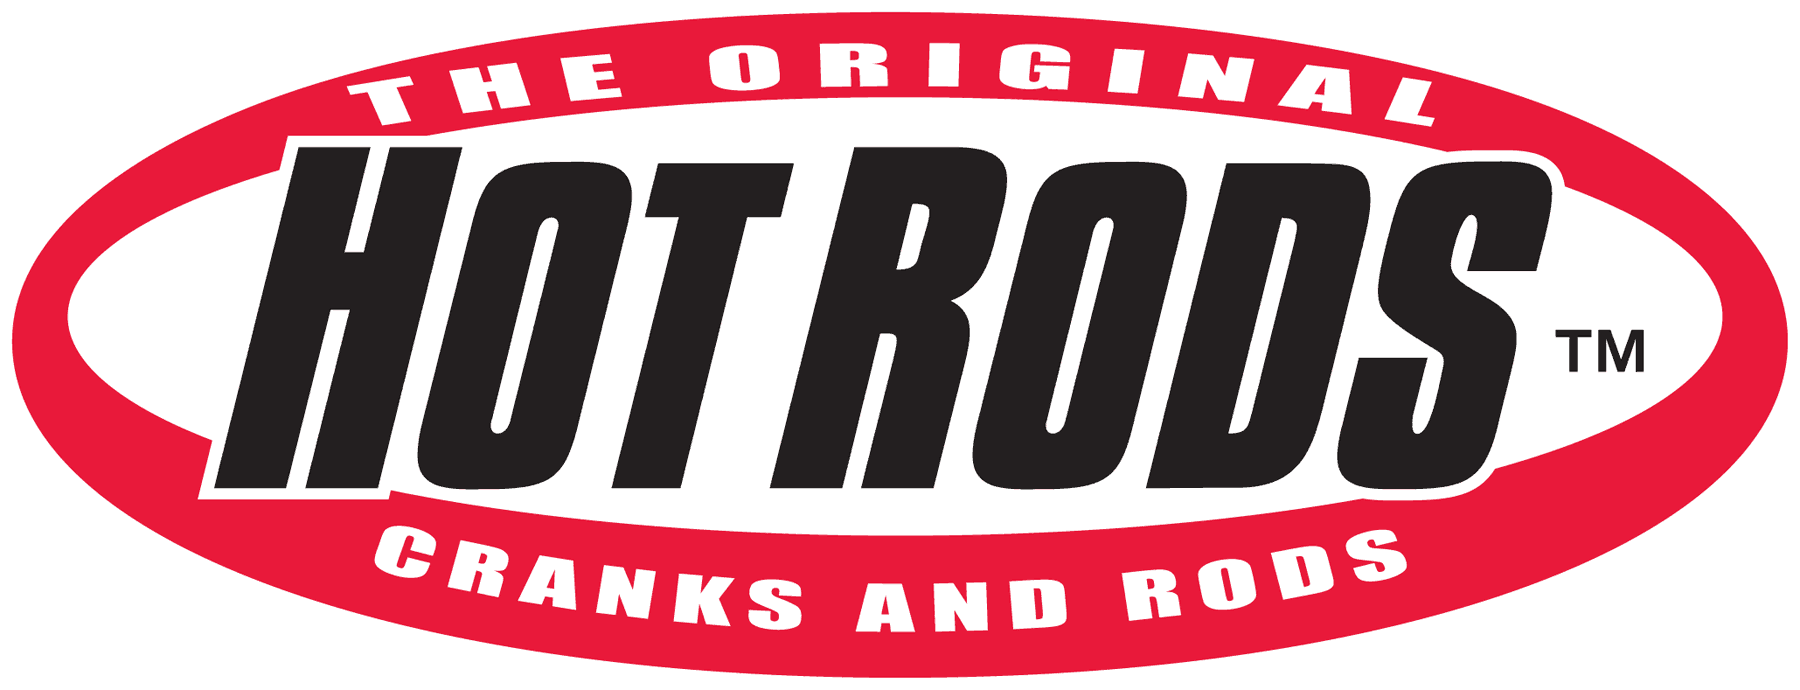 Hot Rod Logo - Hot Rods, Inc